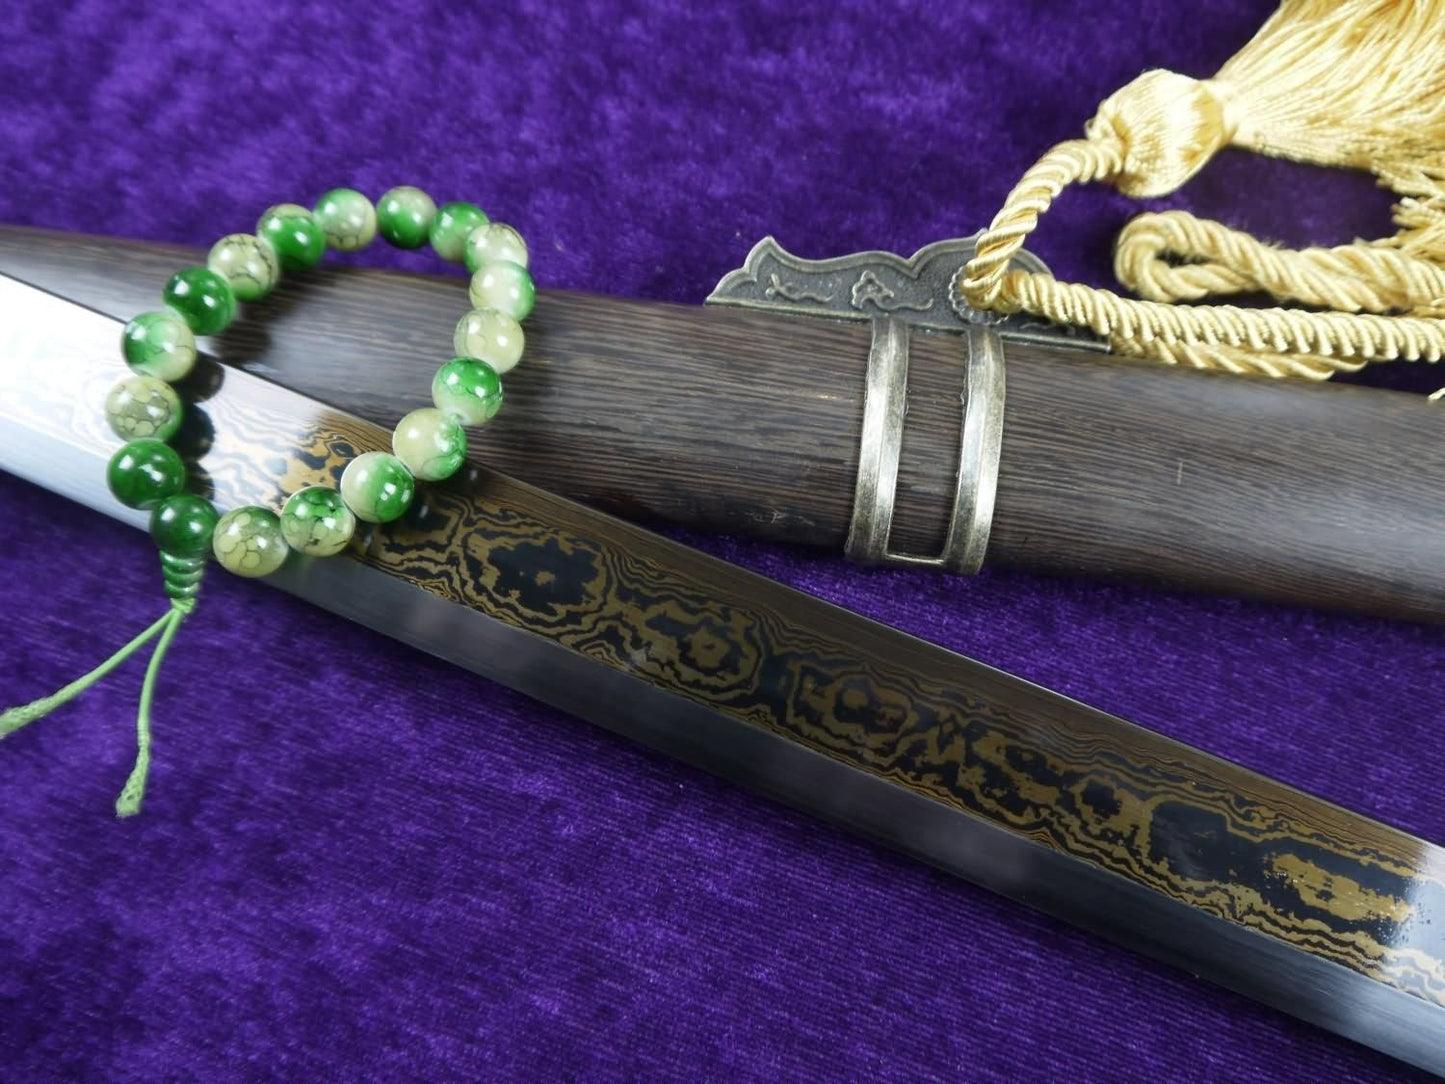 Tang dao sword/Damascus Steel blade/Rosewood Saya/Alloy fittings/Length 39" - Chinese sword shop